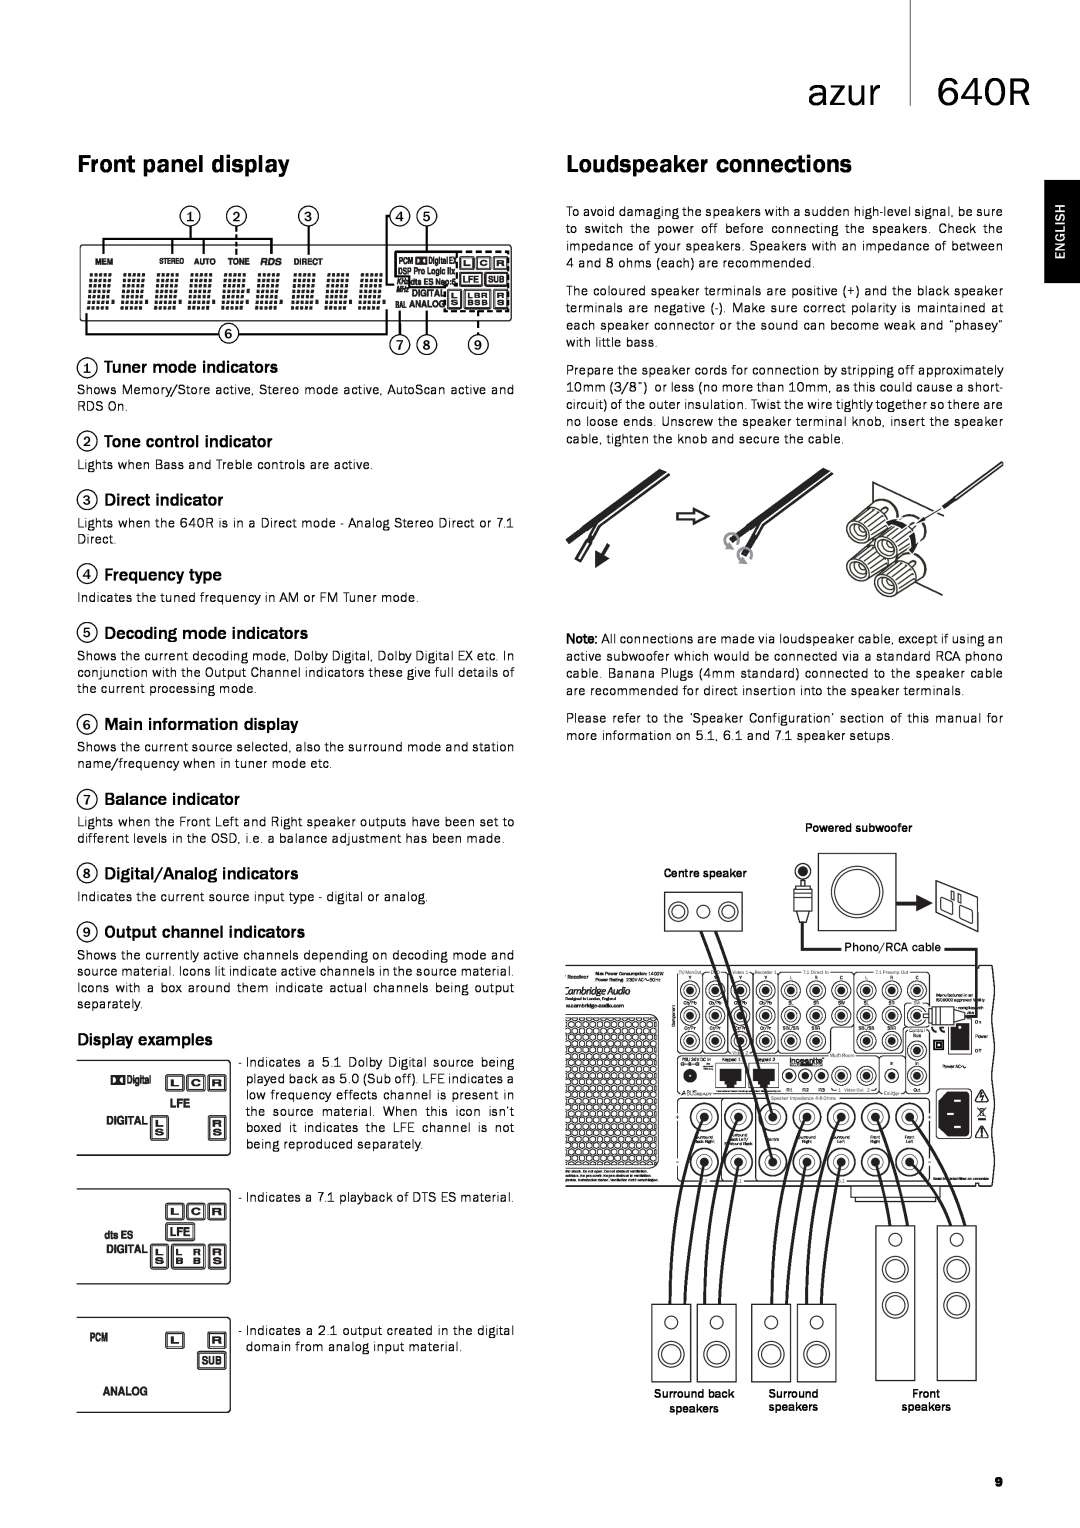 Cambridge Audio user manual Front panel display, Loudspeaker connections, azur 640R 